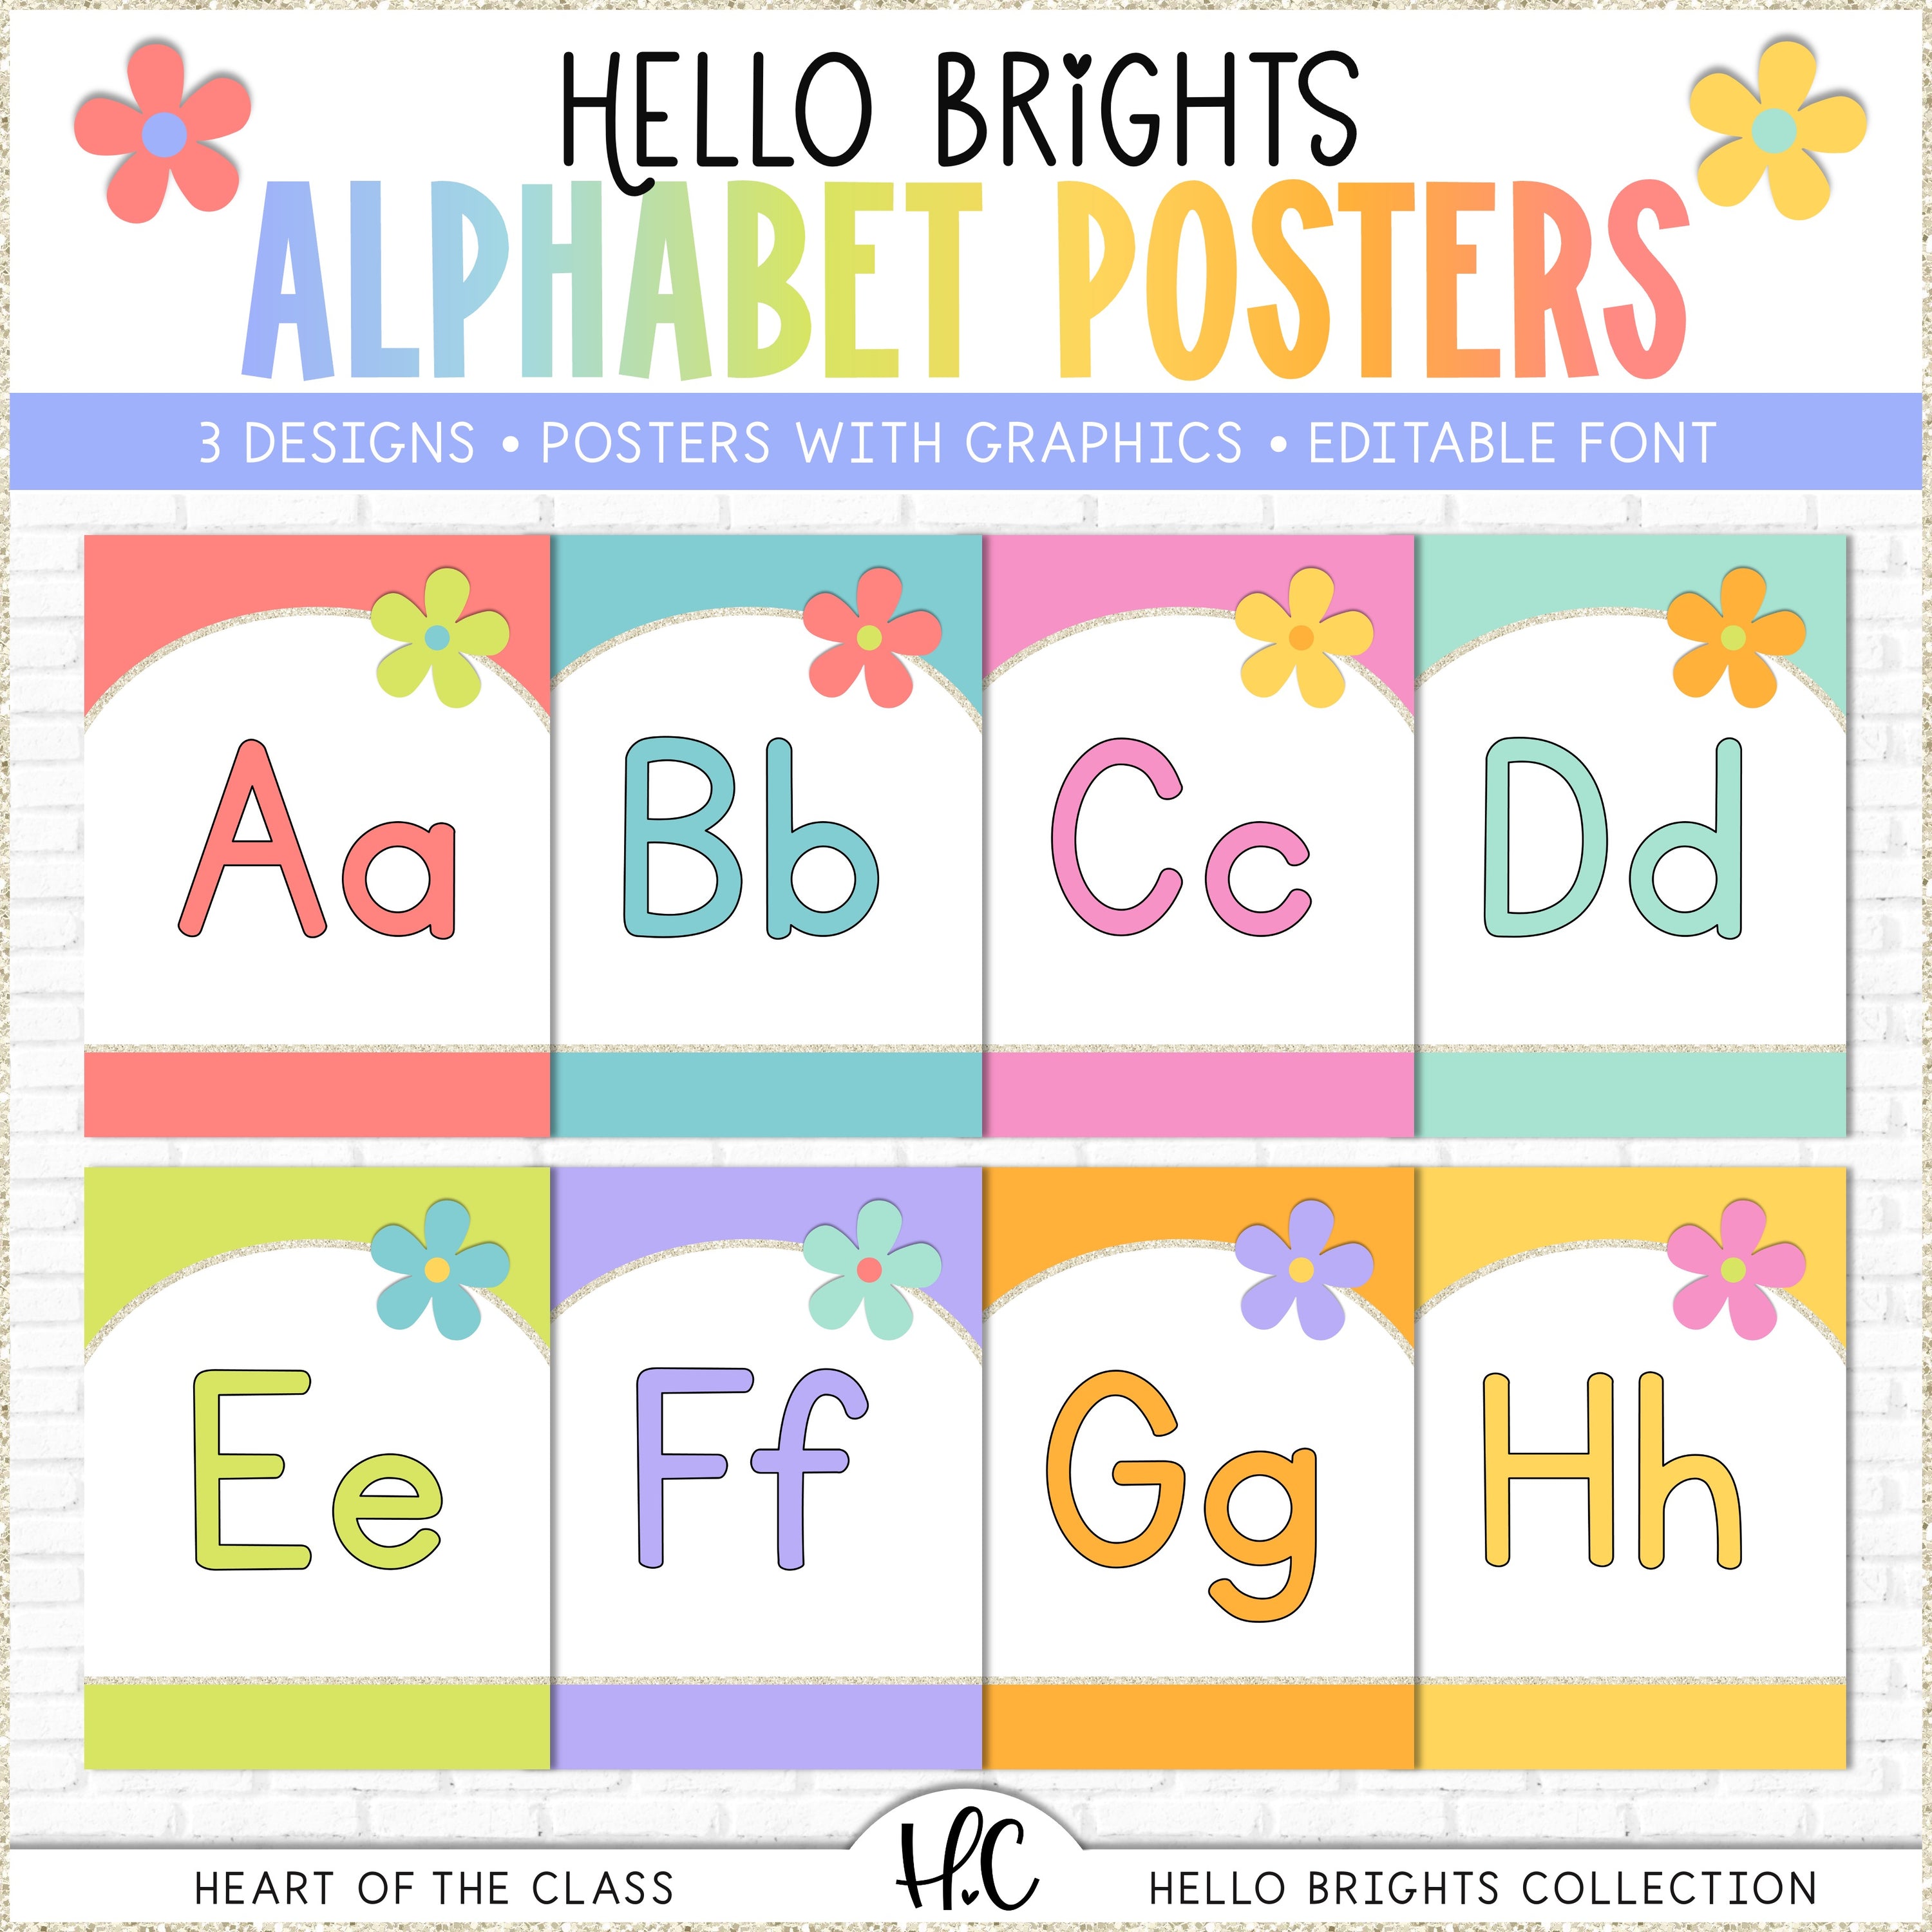 Hello Brights Alphabet Posters